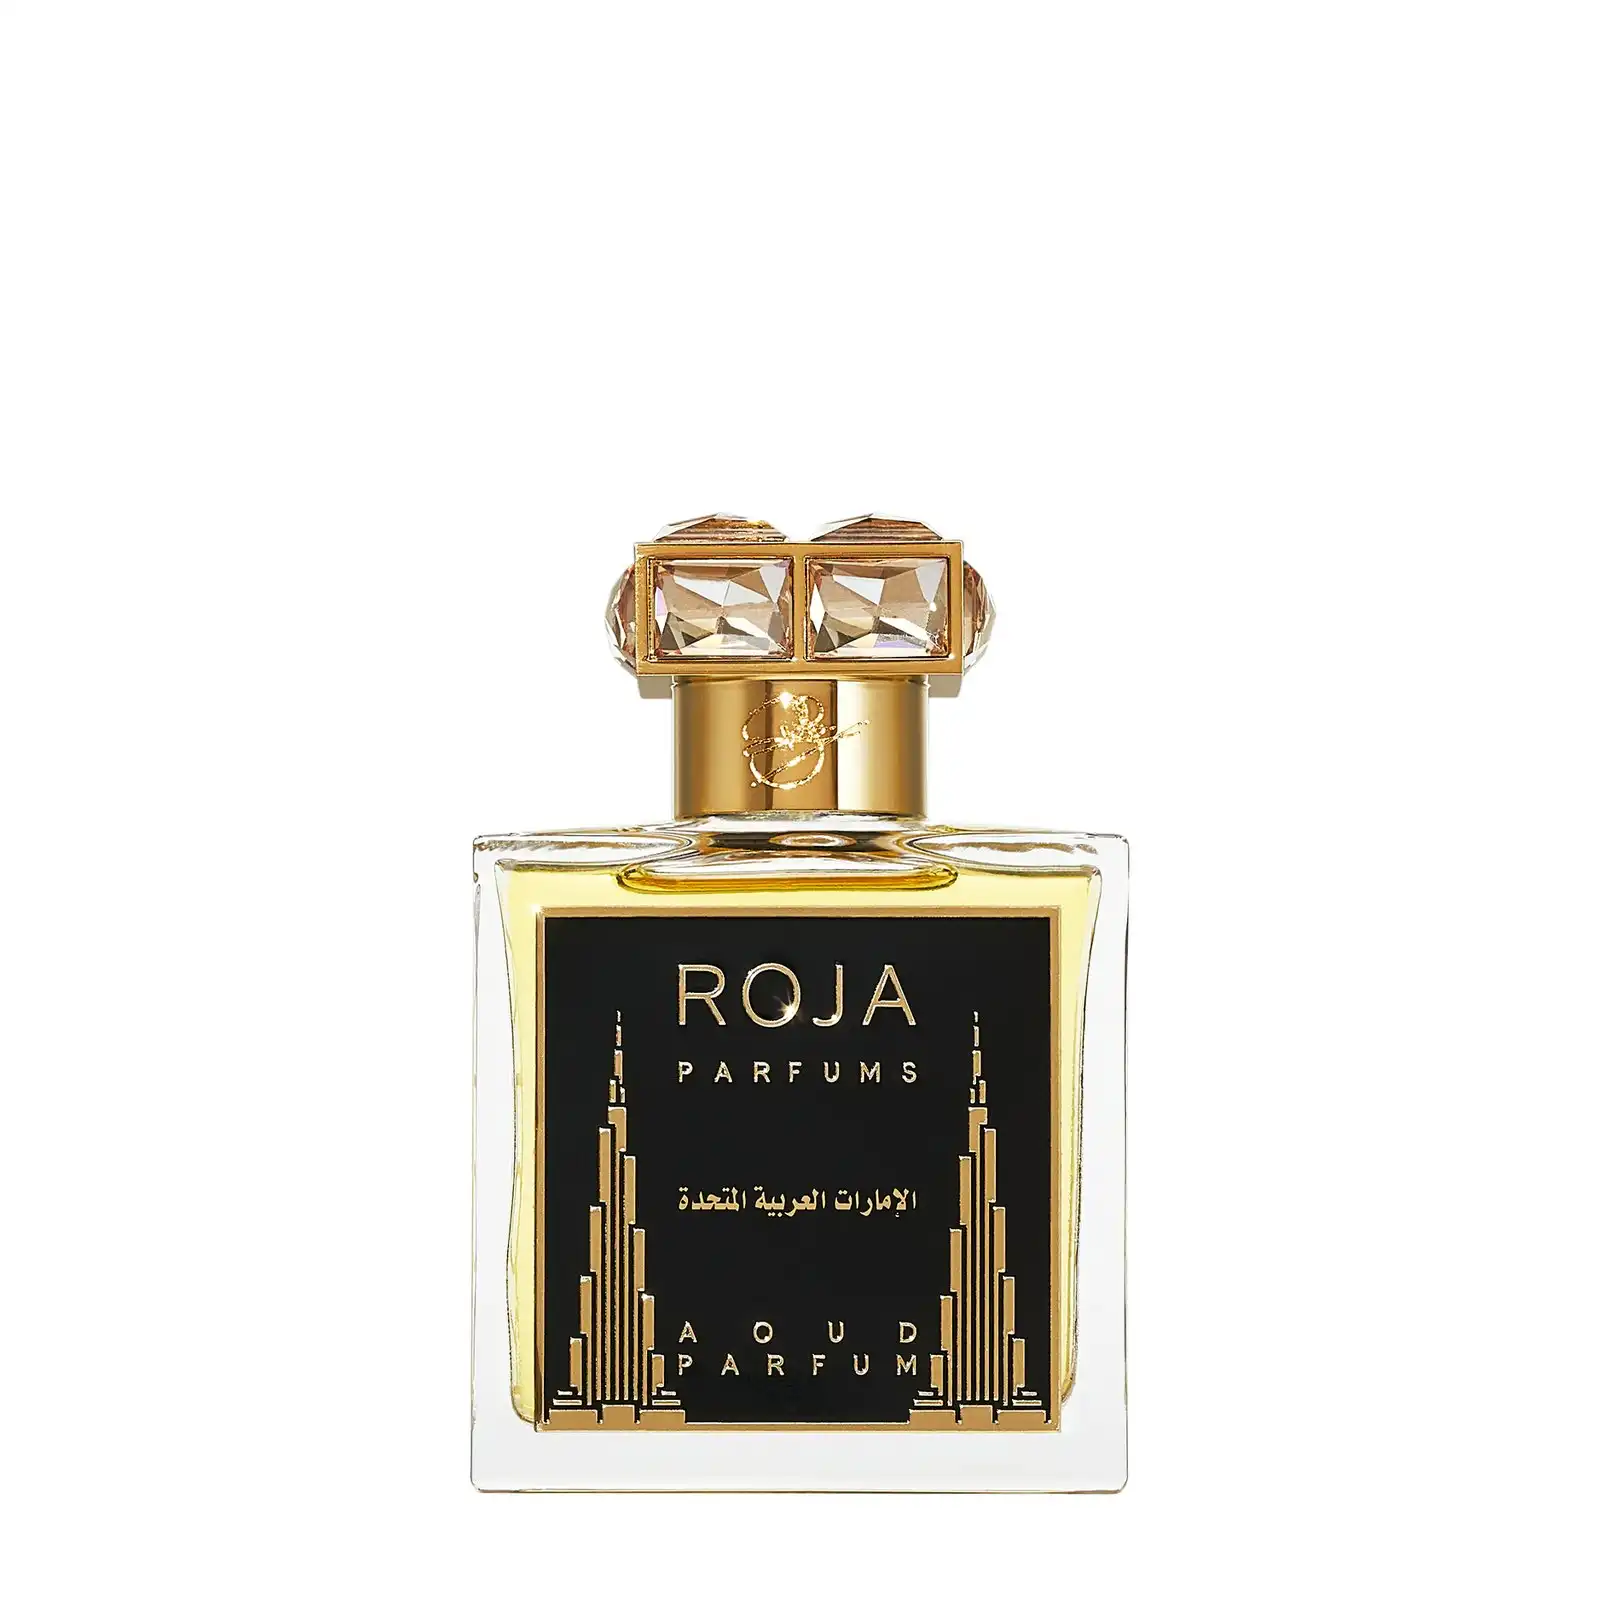 Roja Perfums United Arab Emirates Aoud Parfum 50ml